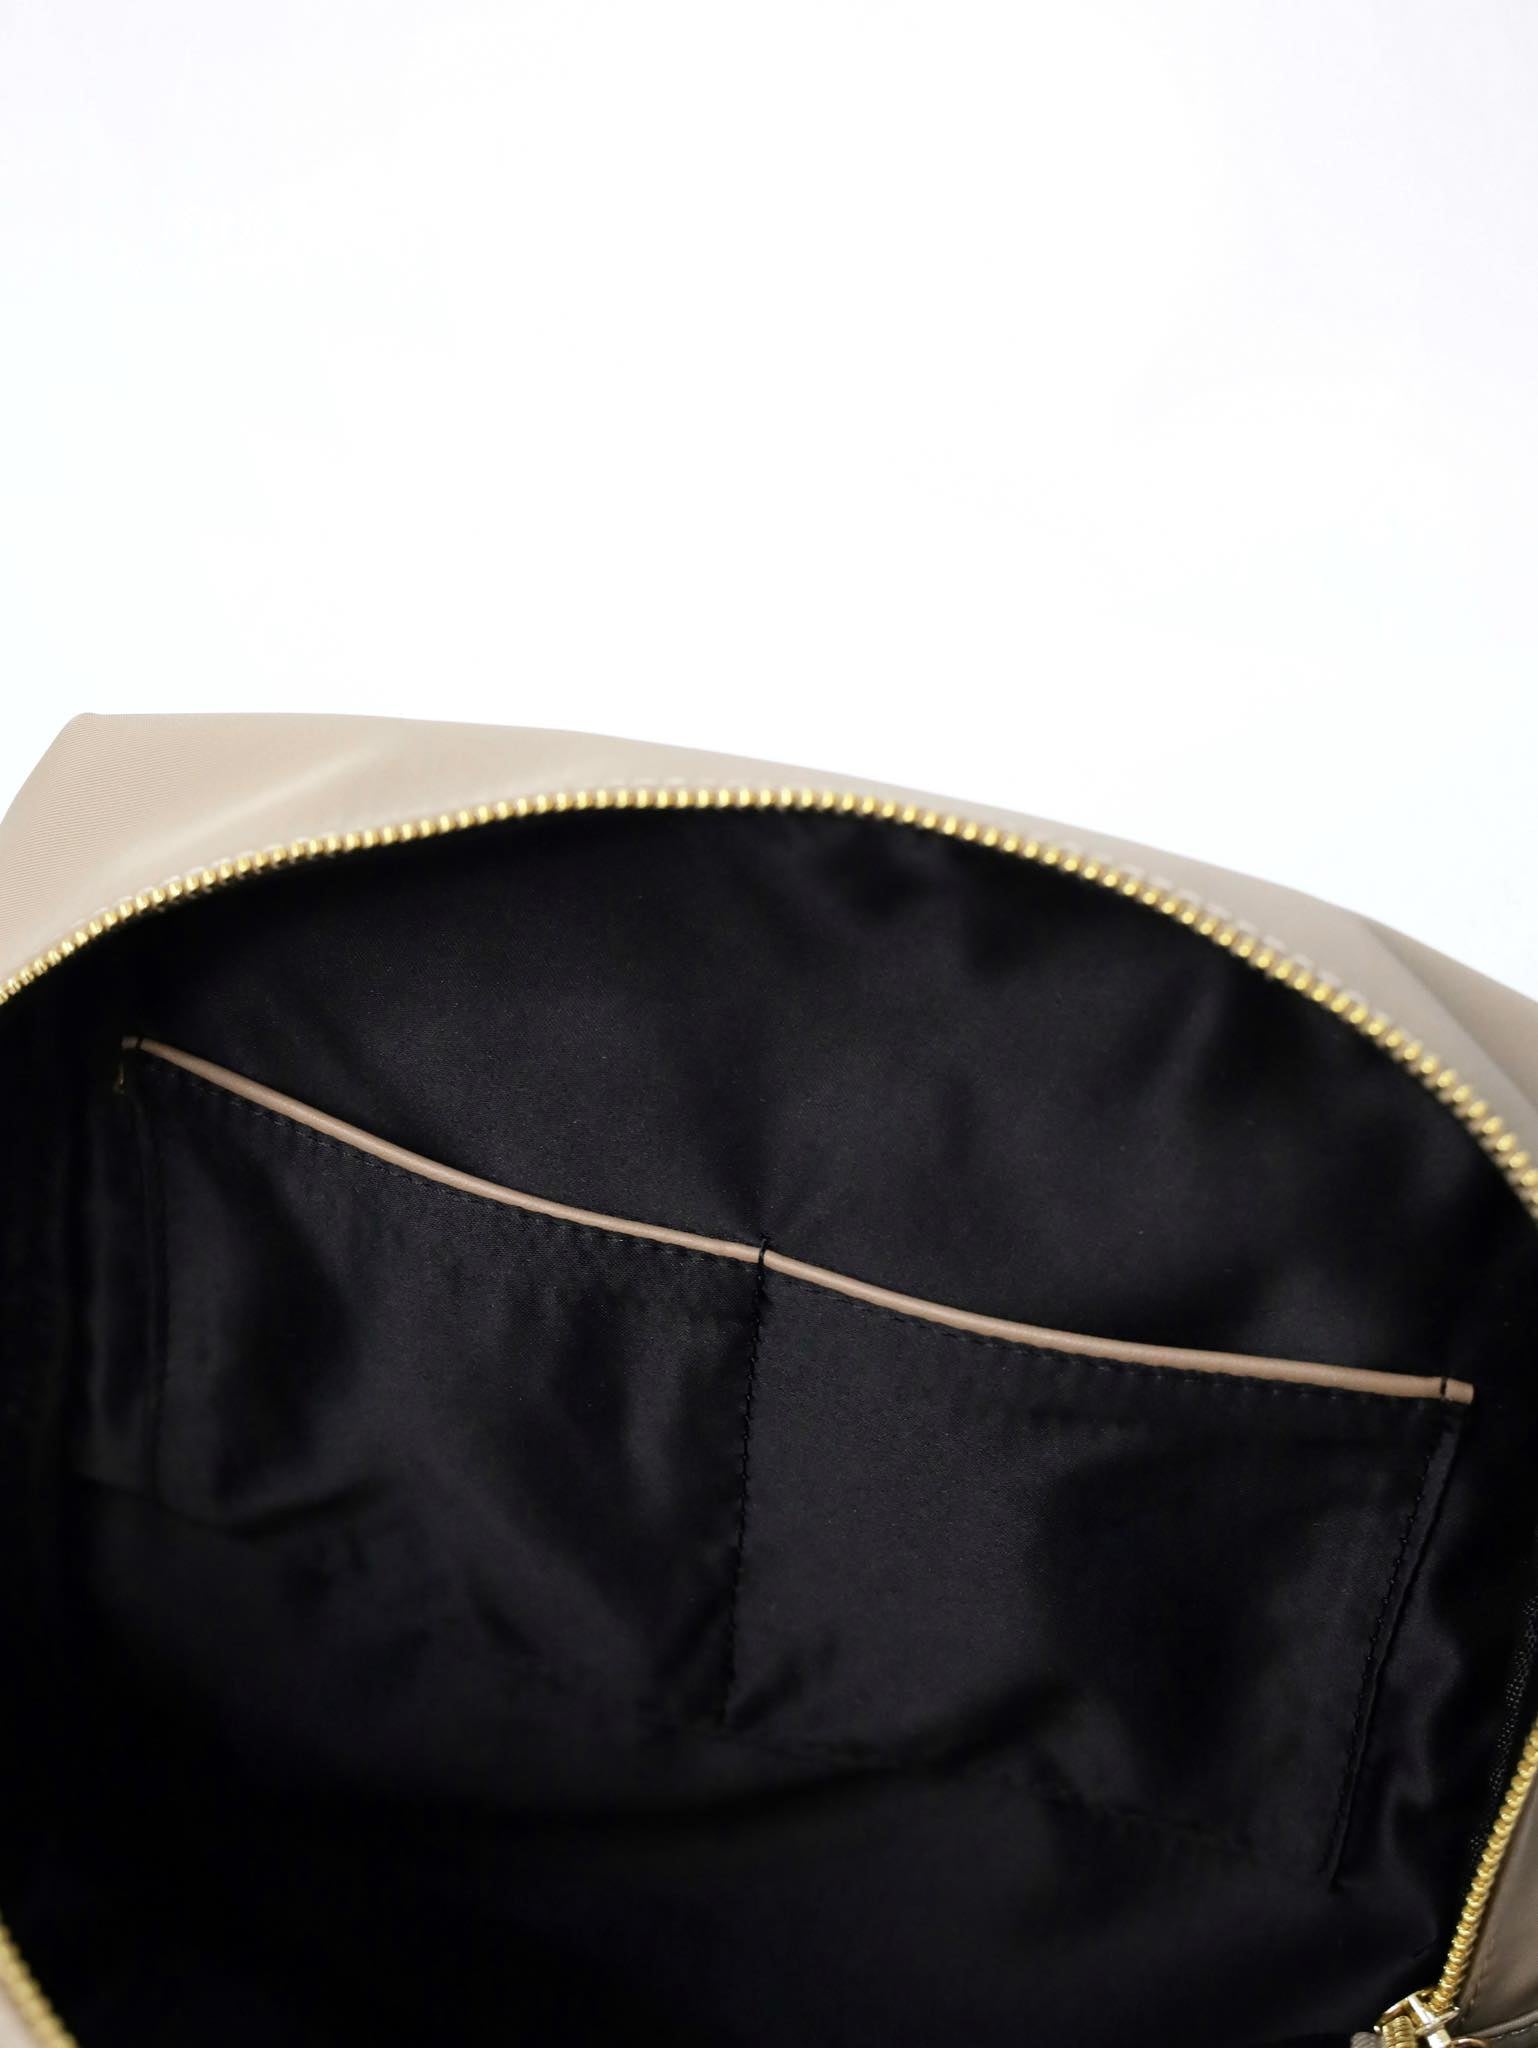 Aemi (3.0) Two Ways Waterproof Nylon Backpack